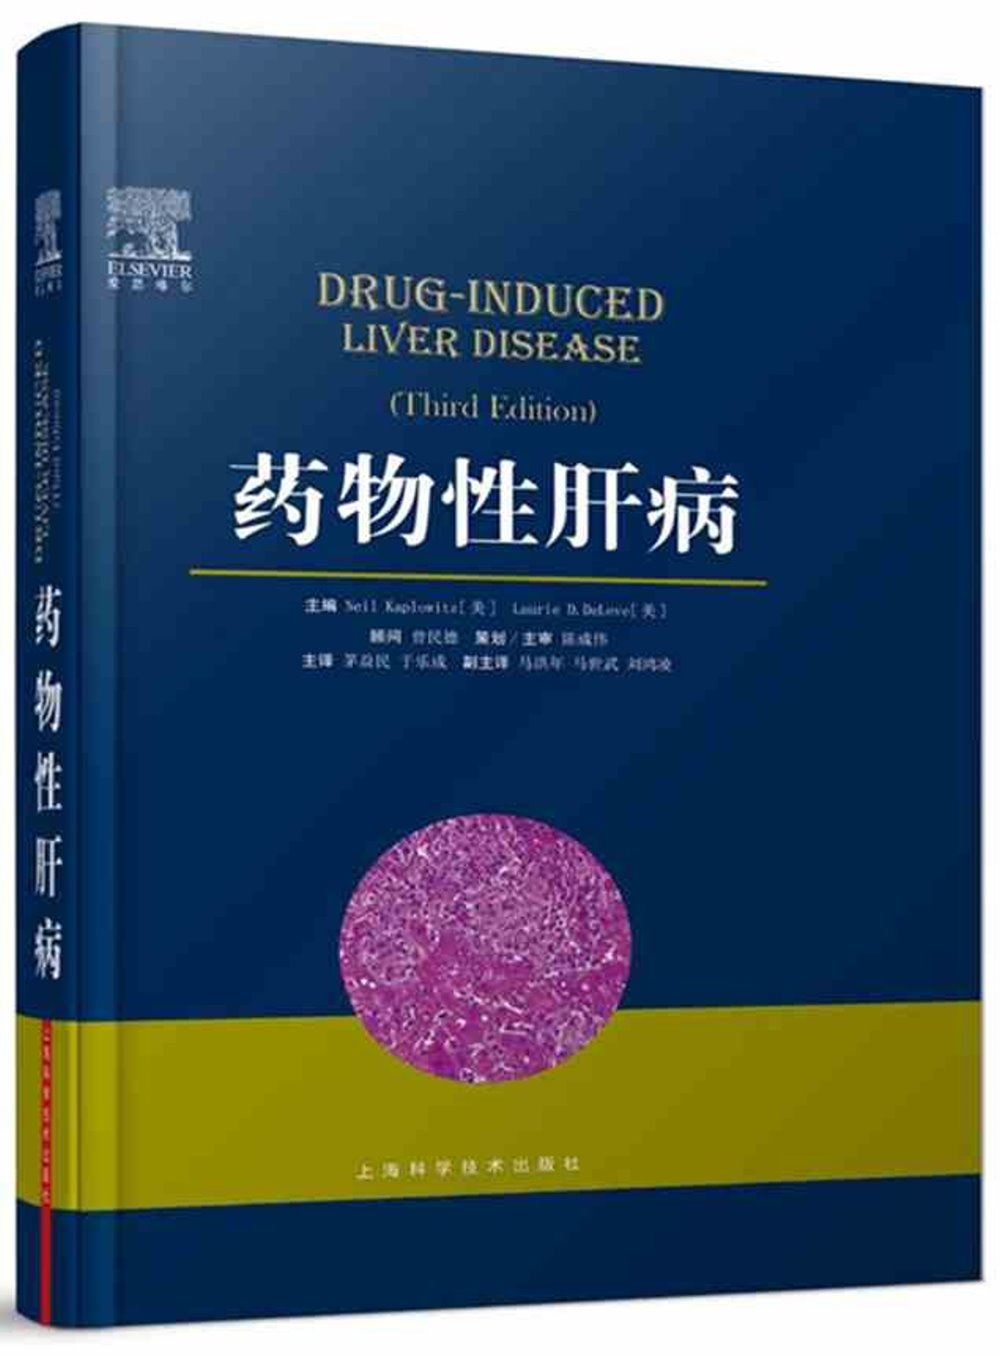 藥物性肝病（Third Edition）